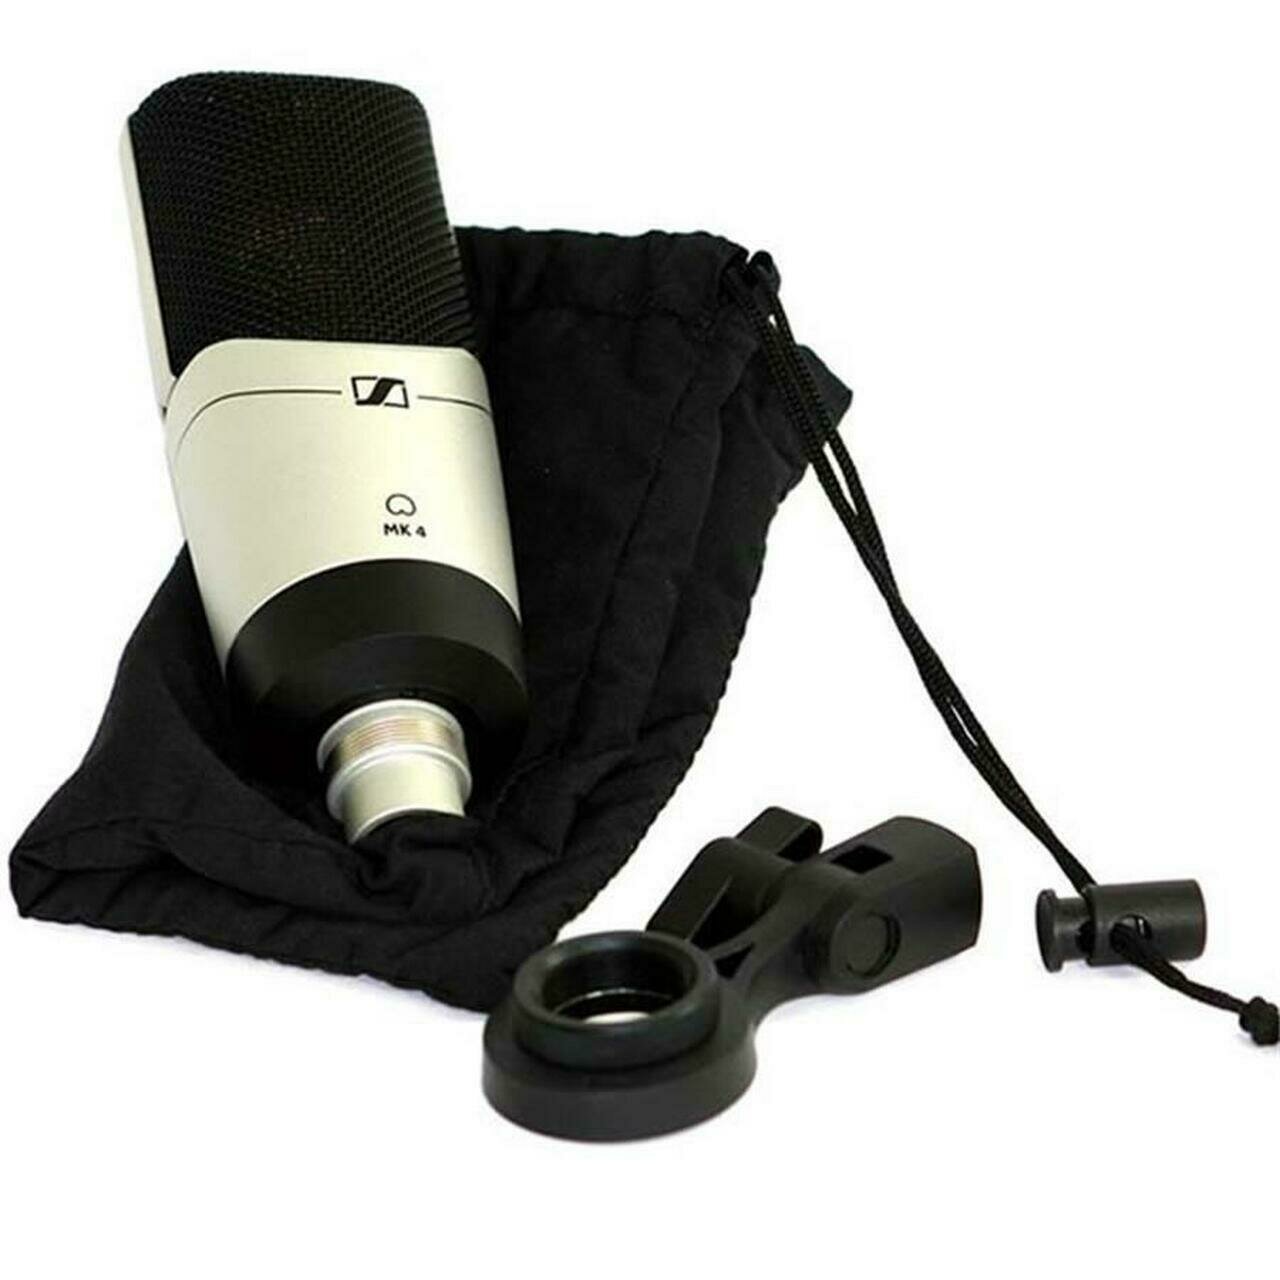 Sennheiser MK 4 Large-Diaphragm Studio Condenser Microphone
#SEMK4 MFR #504298